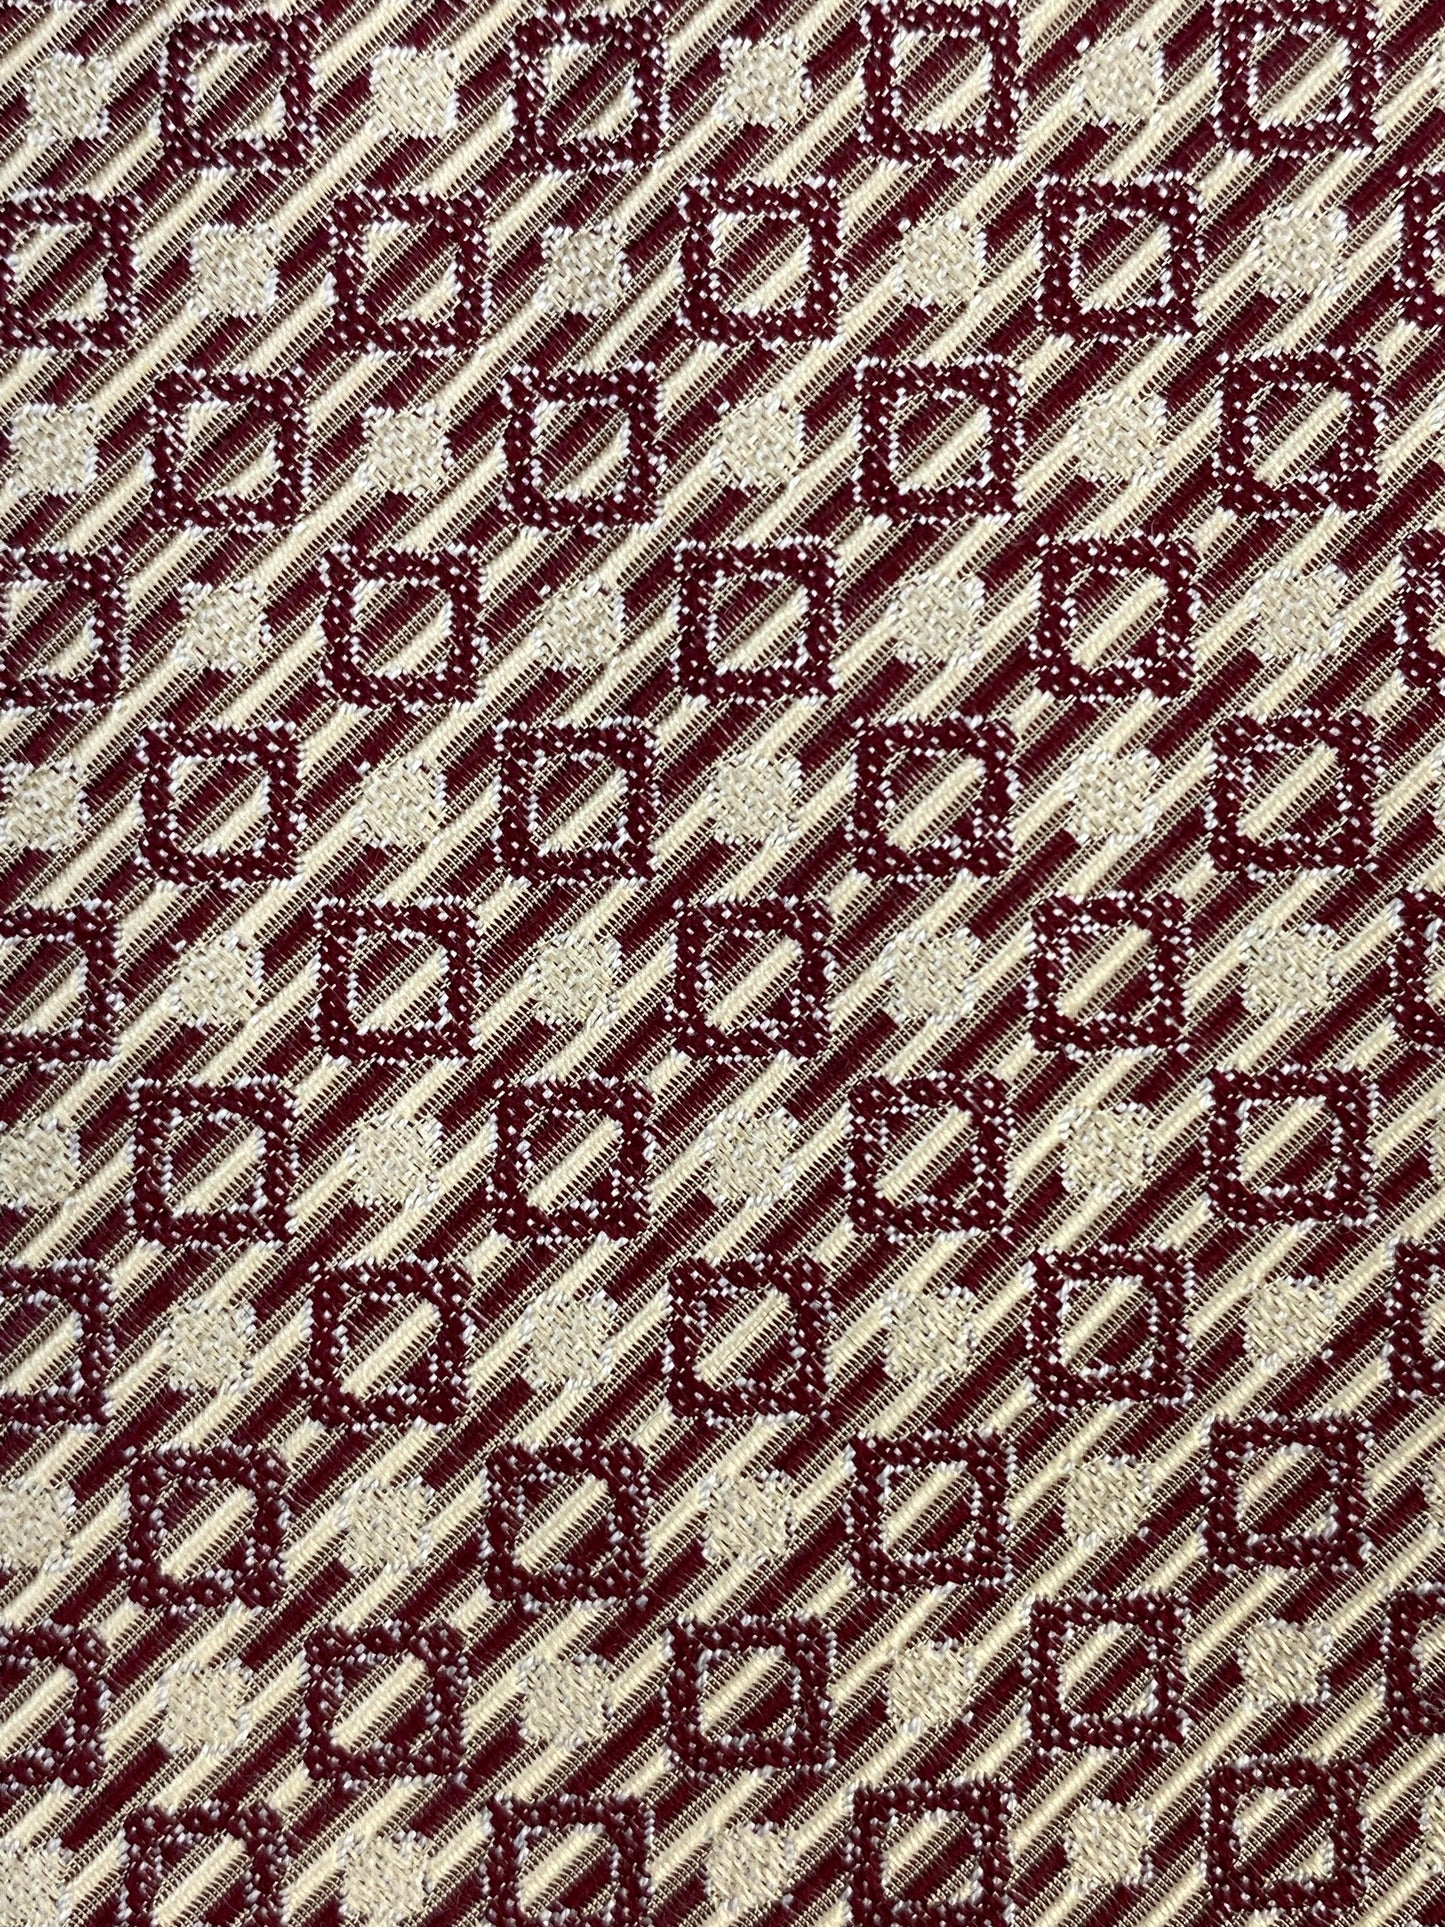 90s Deadstock Silk Necktie, Vintage Wine Geometric Square Pattern Tie, NOS